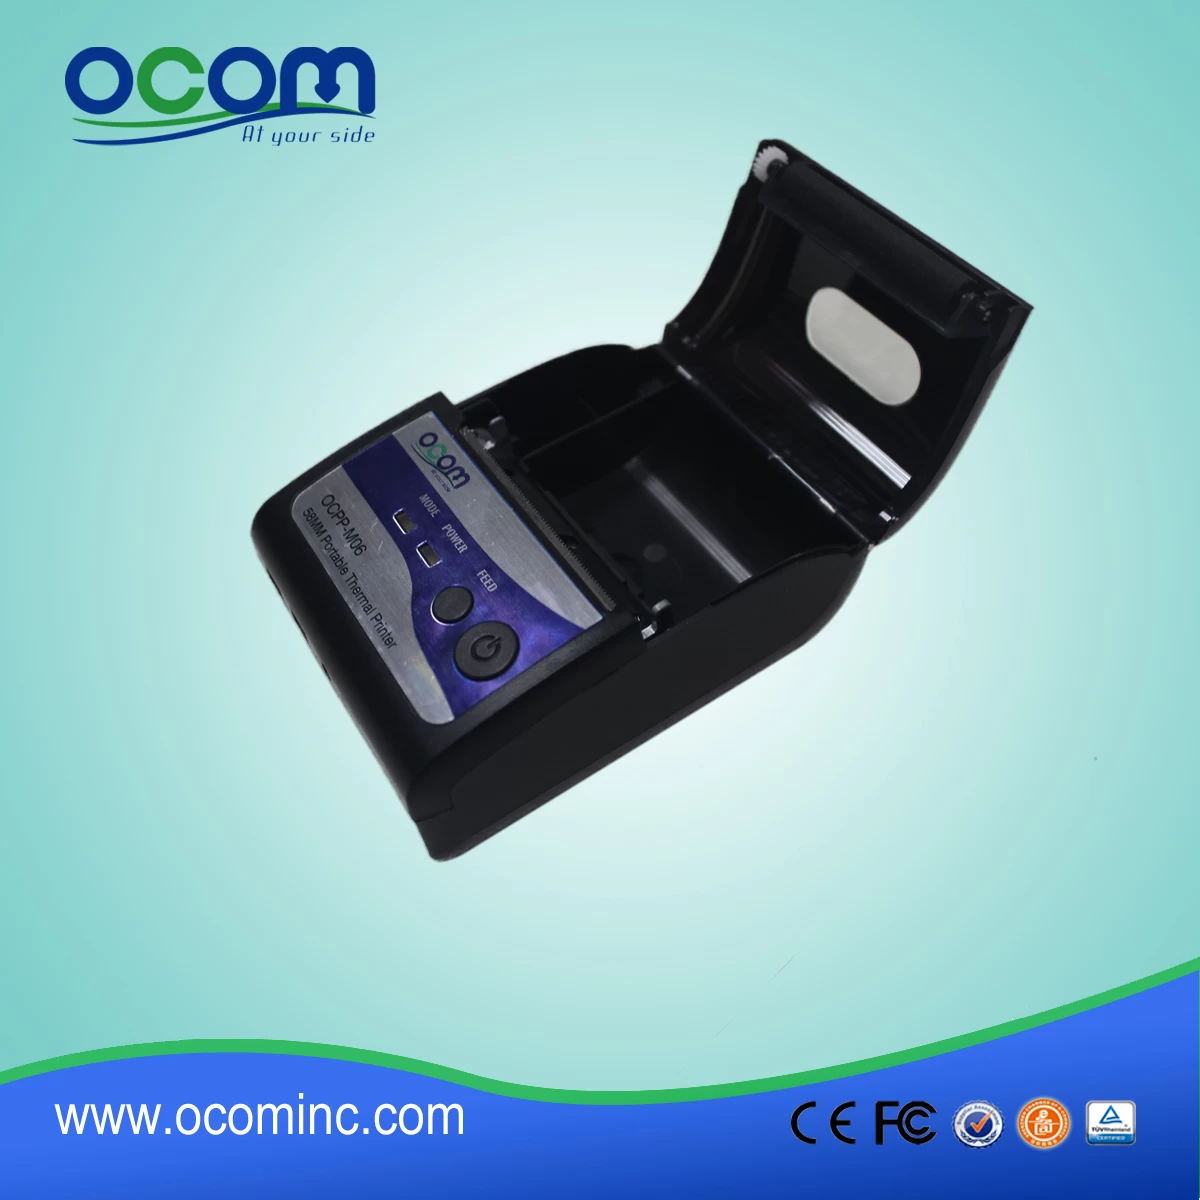 OCPP-M06 Pocket Restaurant Billing Printer Machine